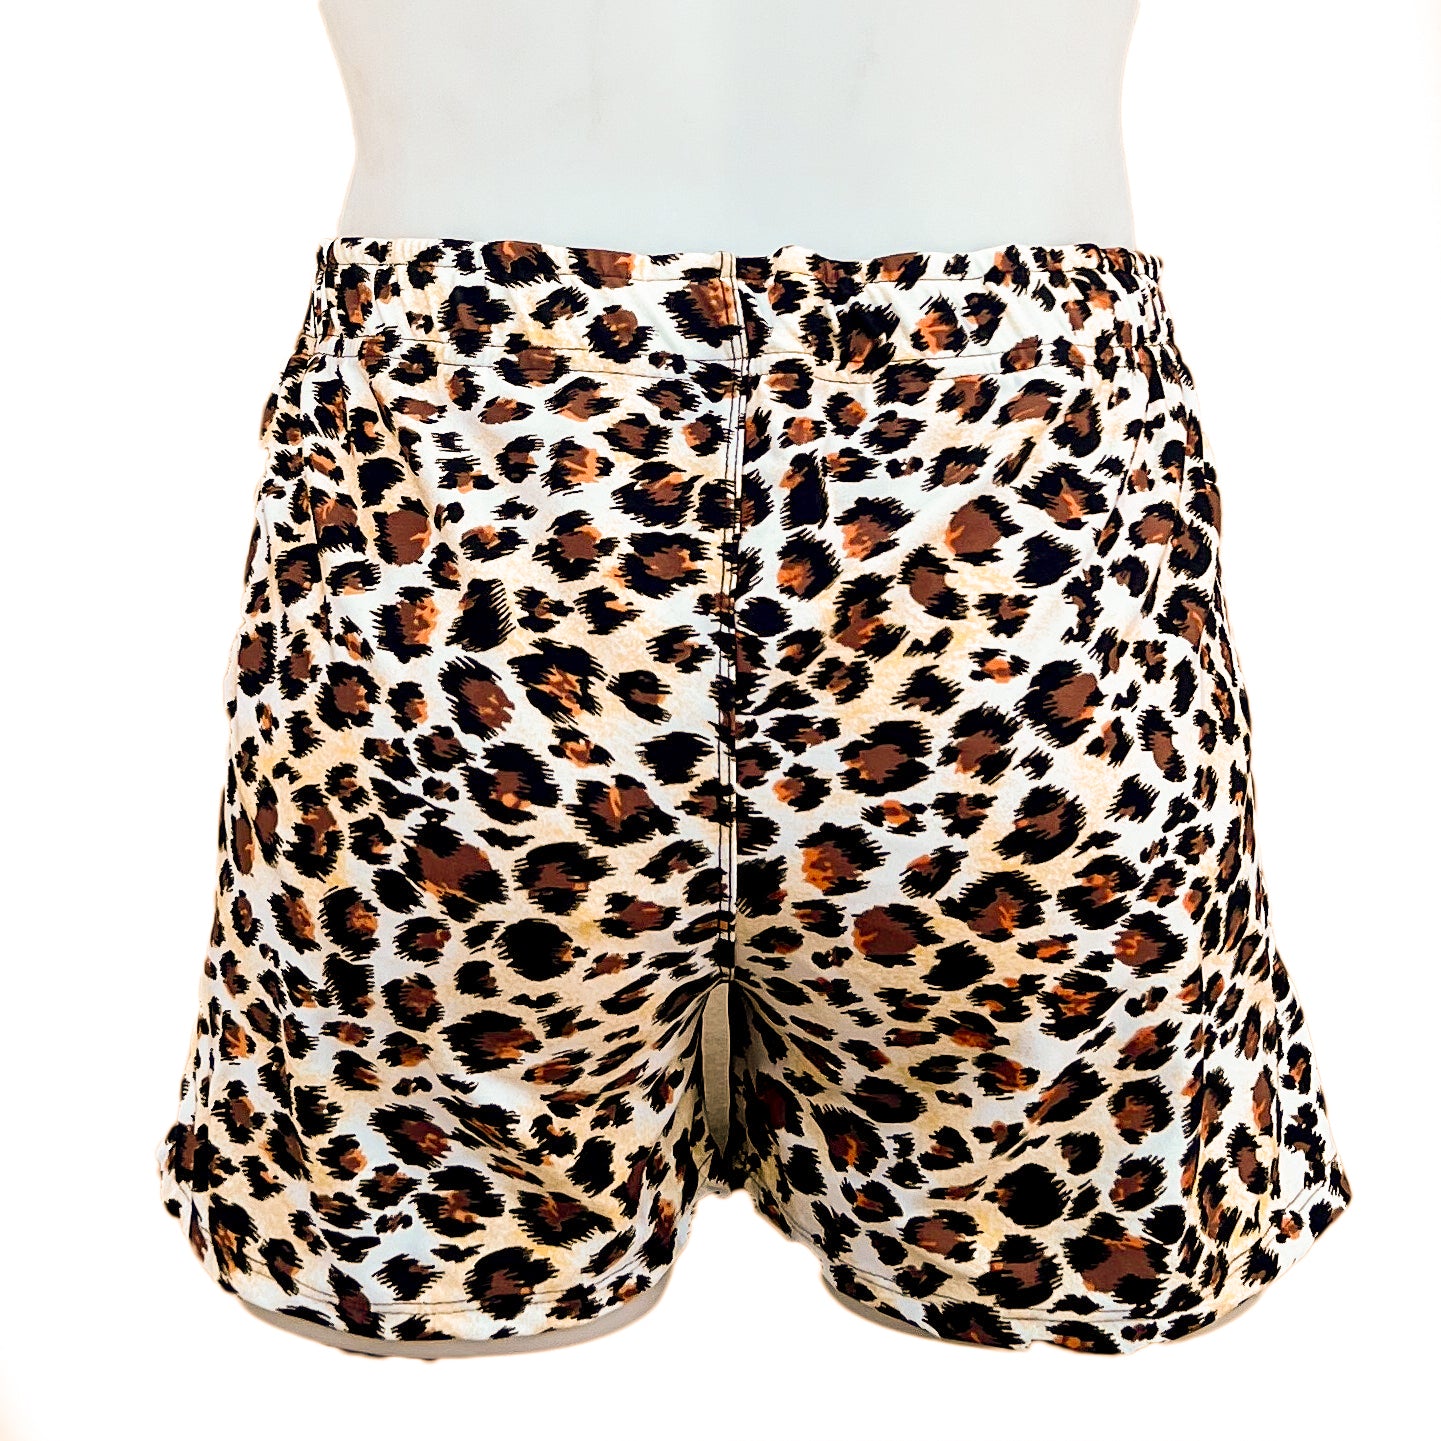 Leopard Swim shorts on a white mannequin.